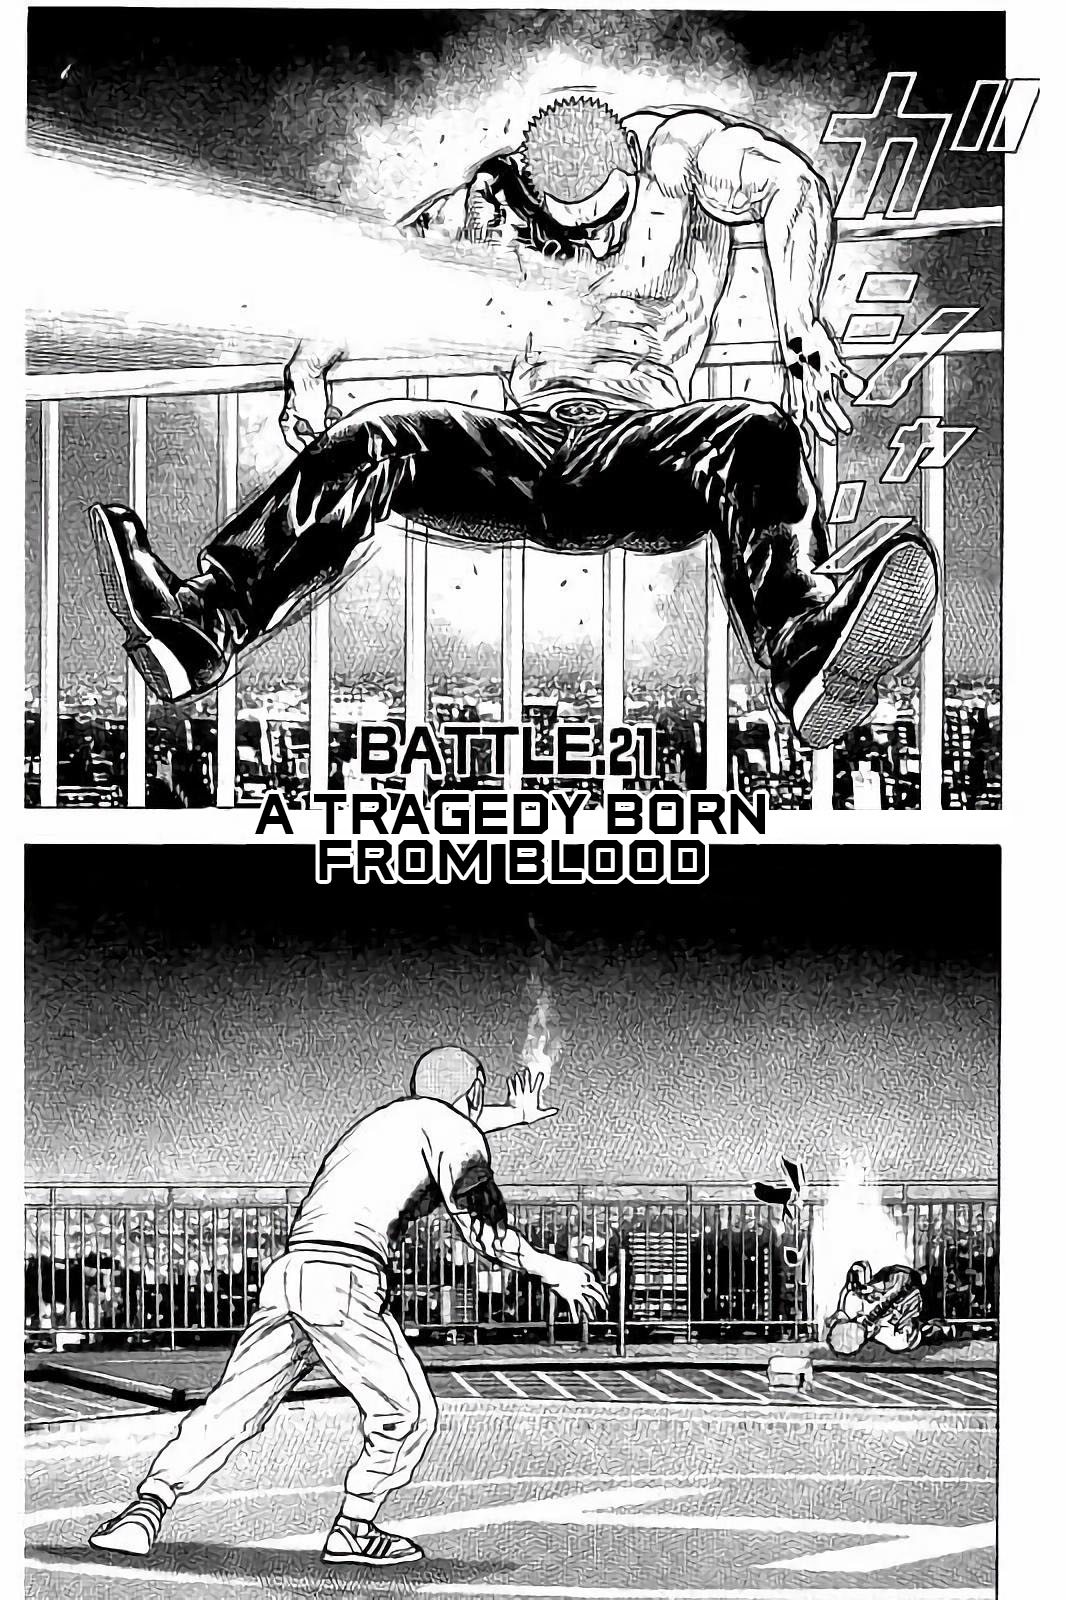 Tough Gaiden - Ryuu Wo Tsugu Otoko Vol.2 Chapter 21: A Tragedy Born From Blood - Picture 1